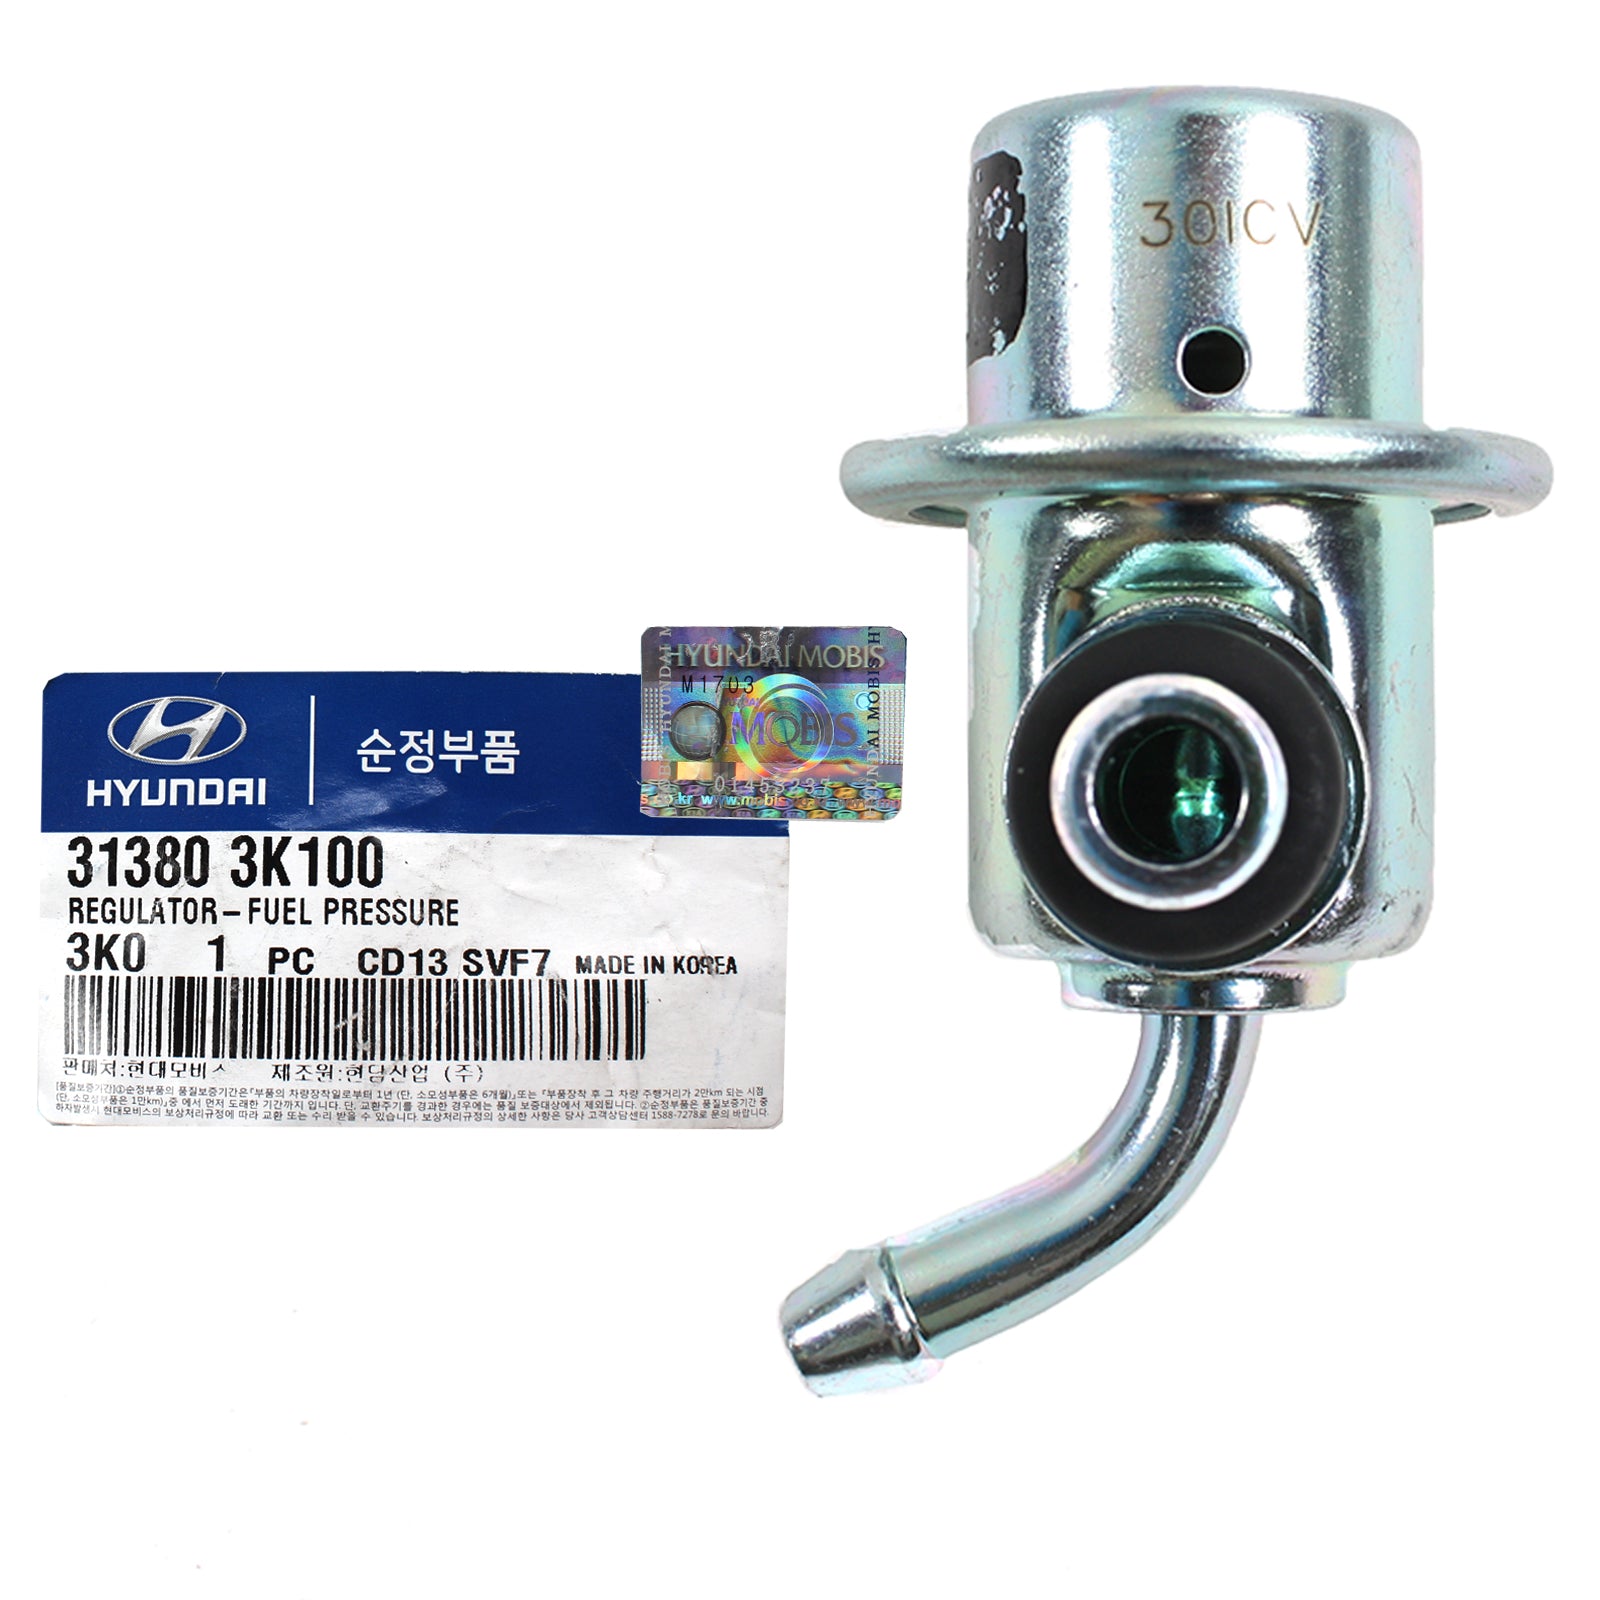 GENUINE Fuel Injection Pressure Regulator for 06-10 Hyundai Sonata 313803K100